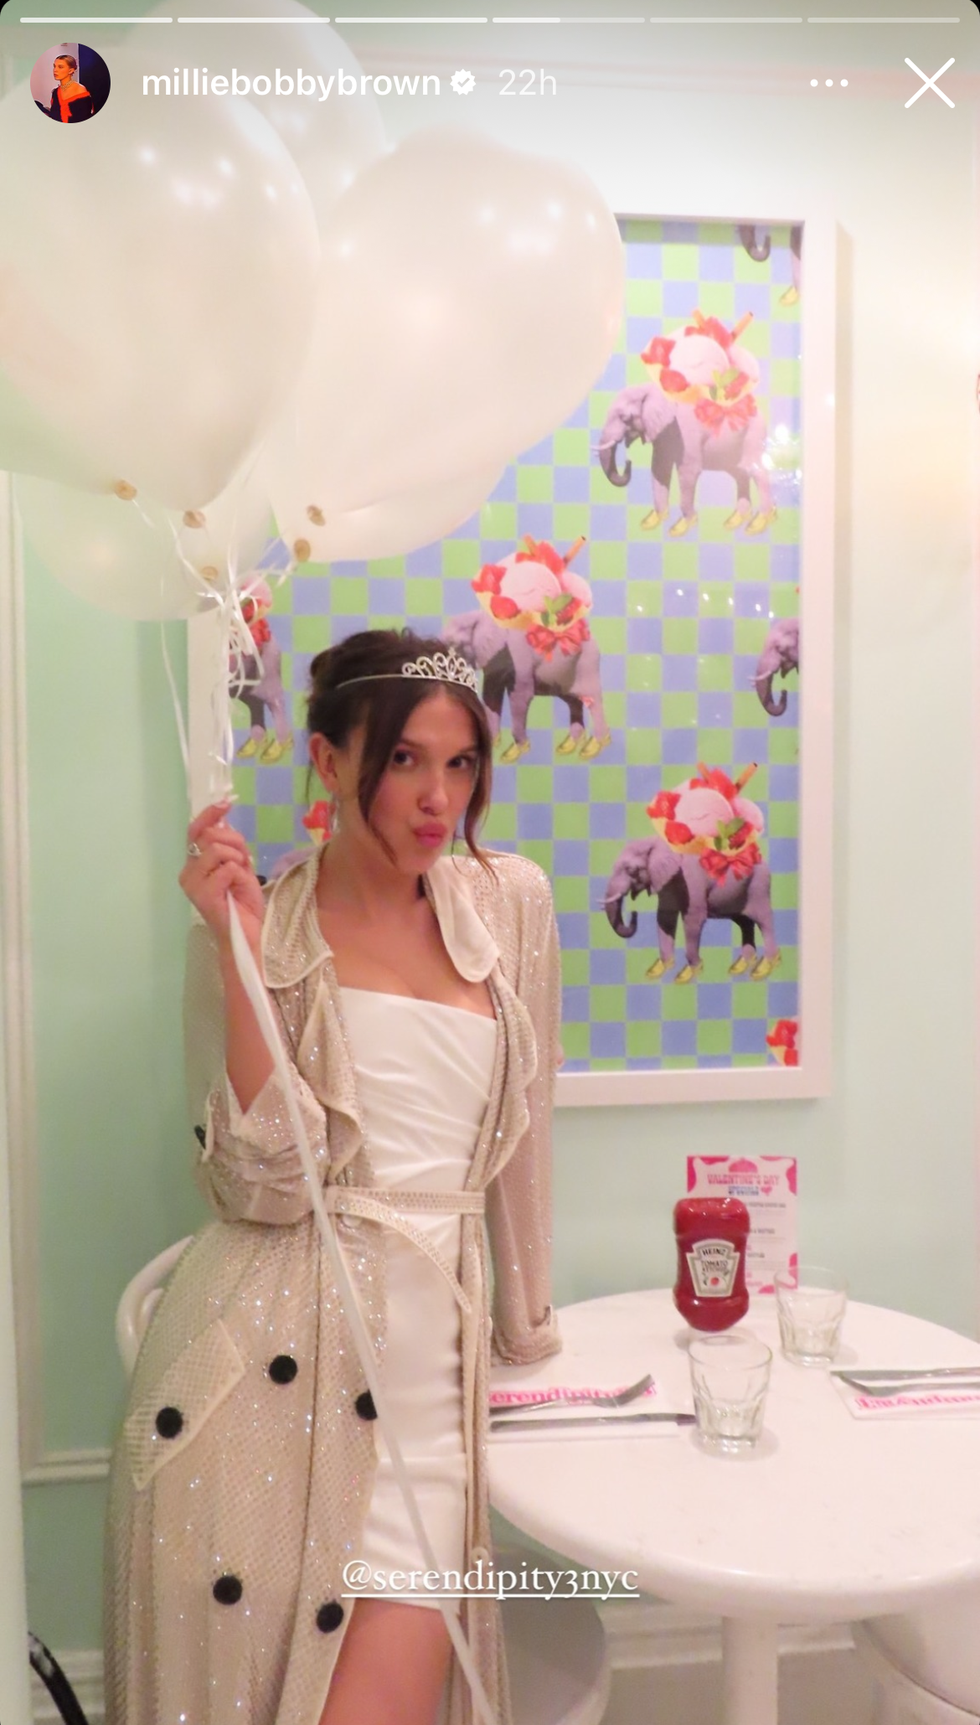 millie bobby brown celebrating her birthday in a white minidress